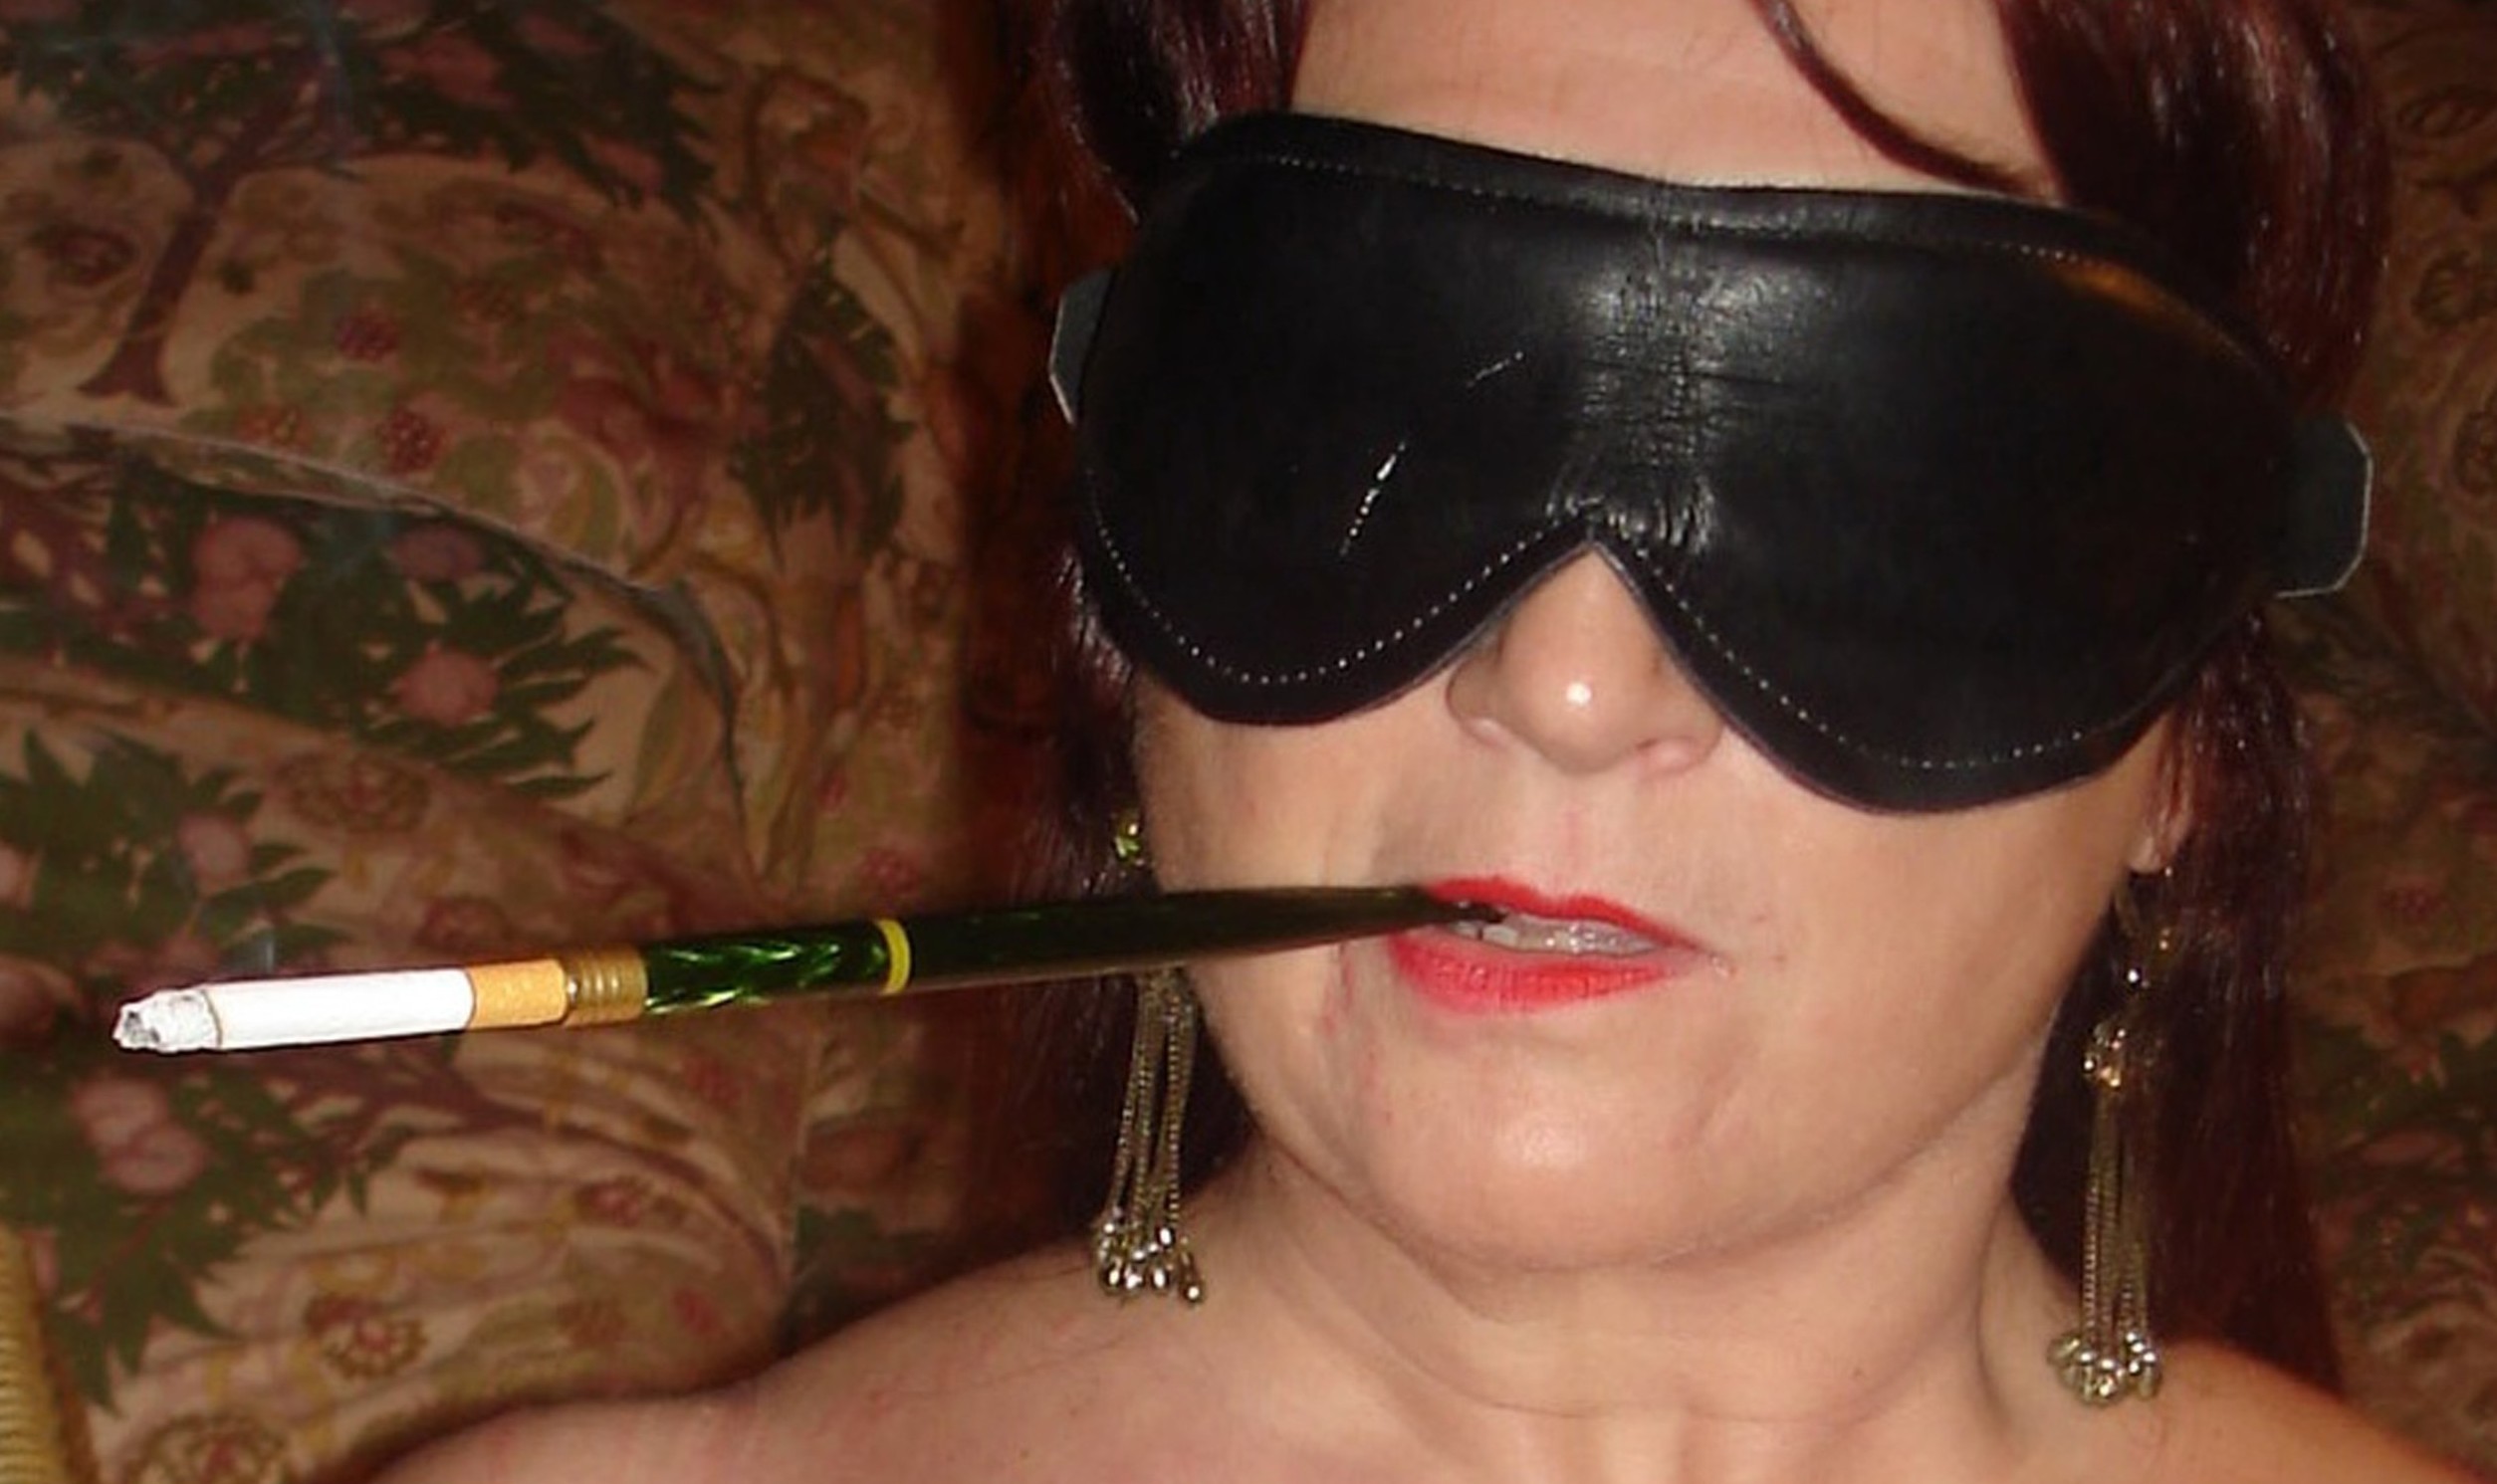 Bound, blindfolded and smoking